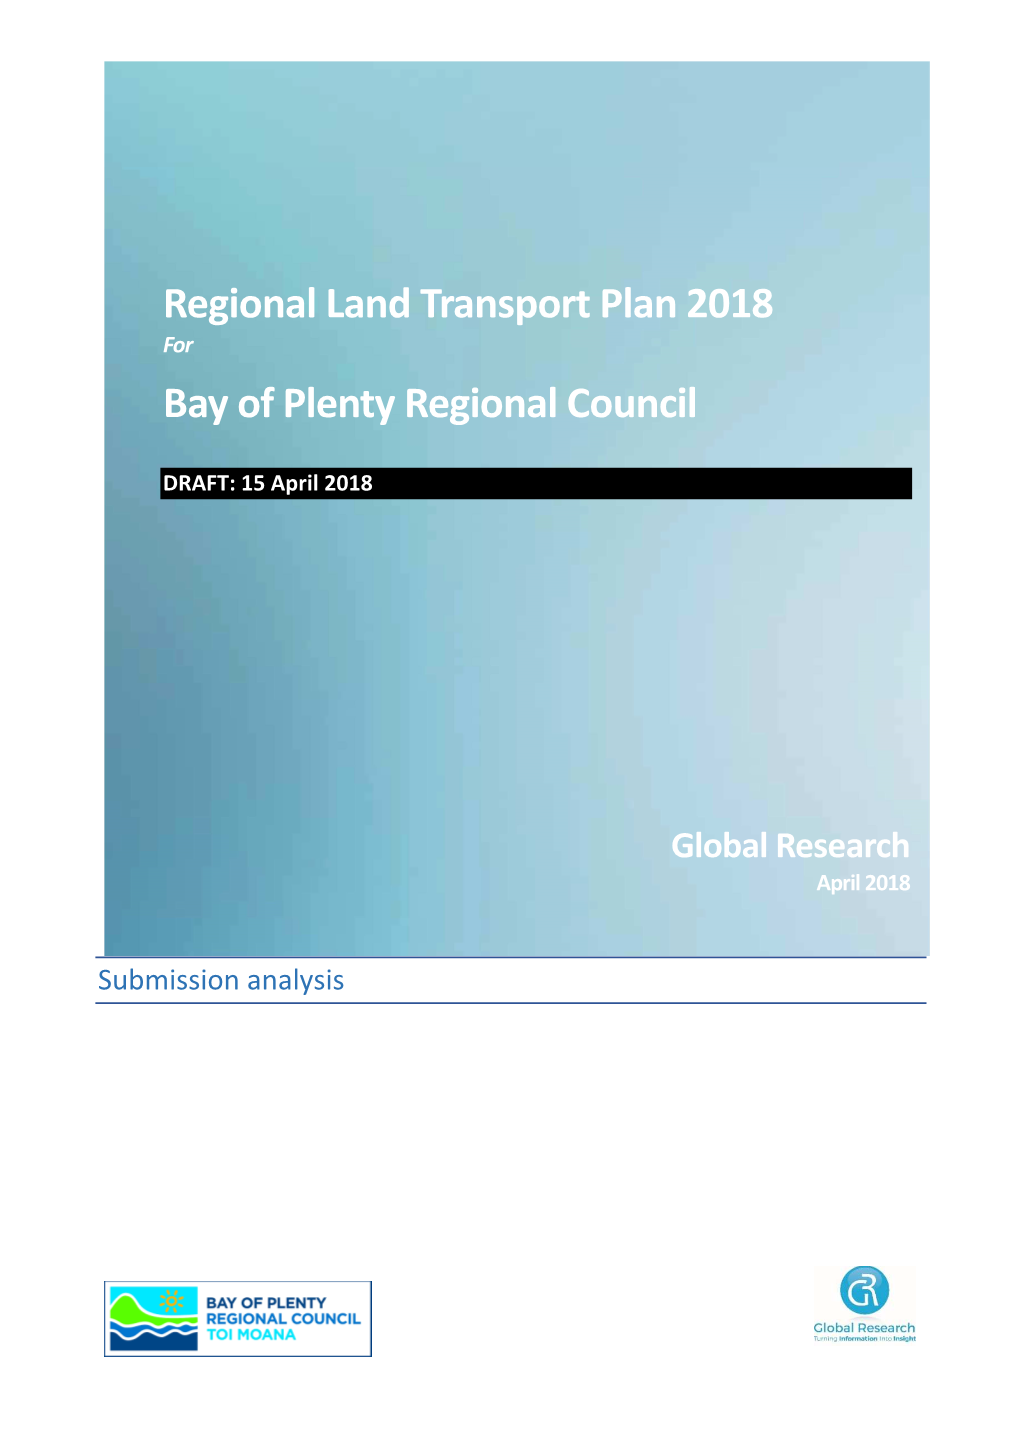 Regional Land Transport Plan 2018 for Bay of Plenty Regional Council